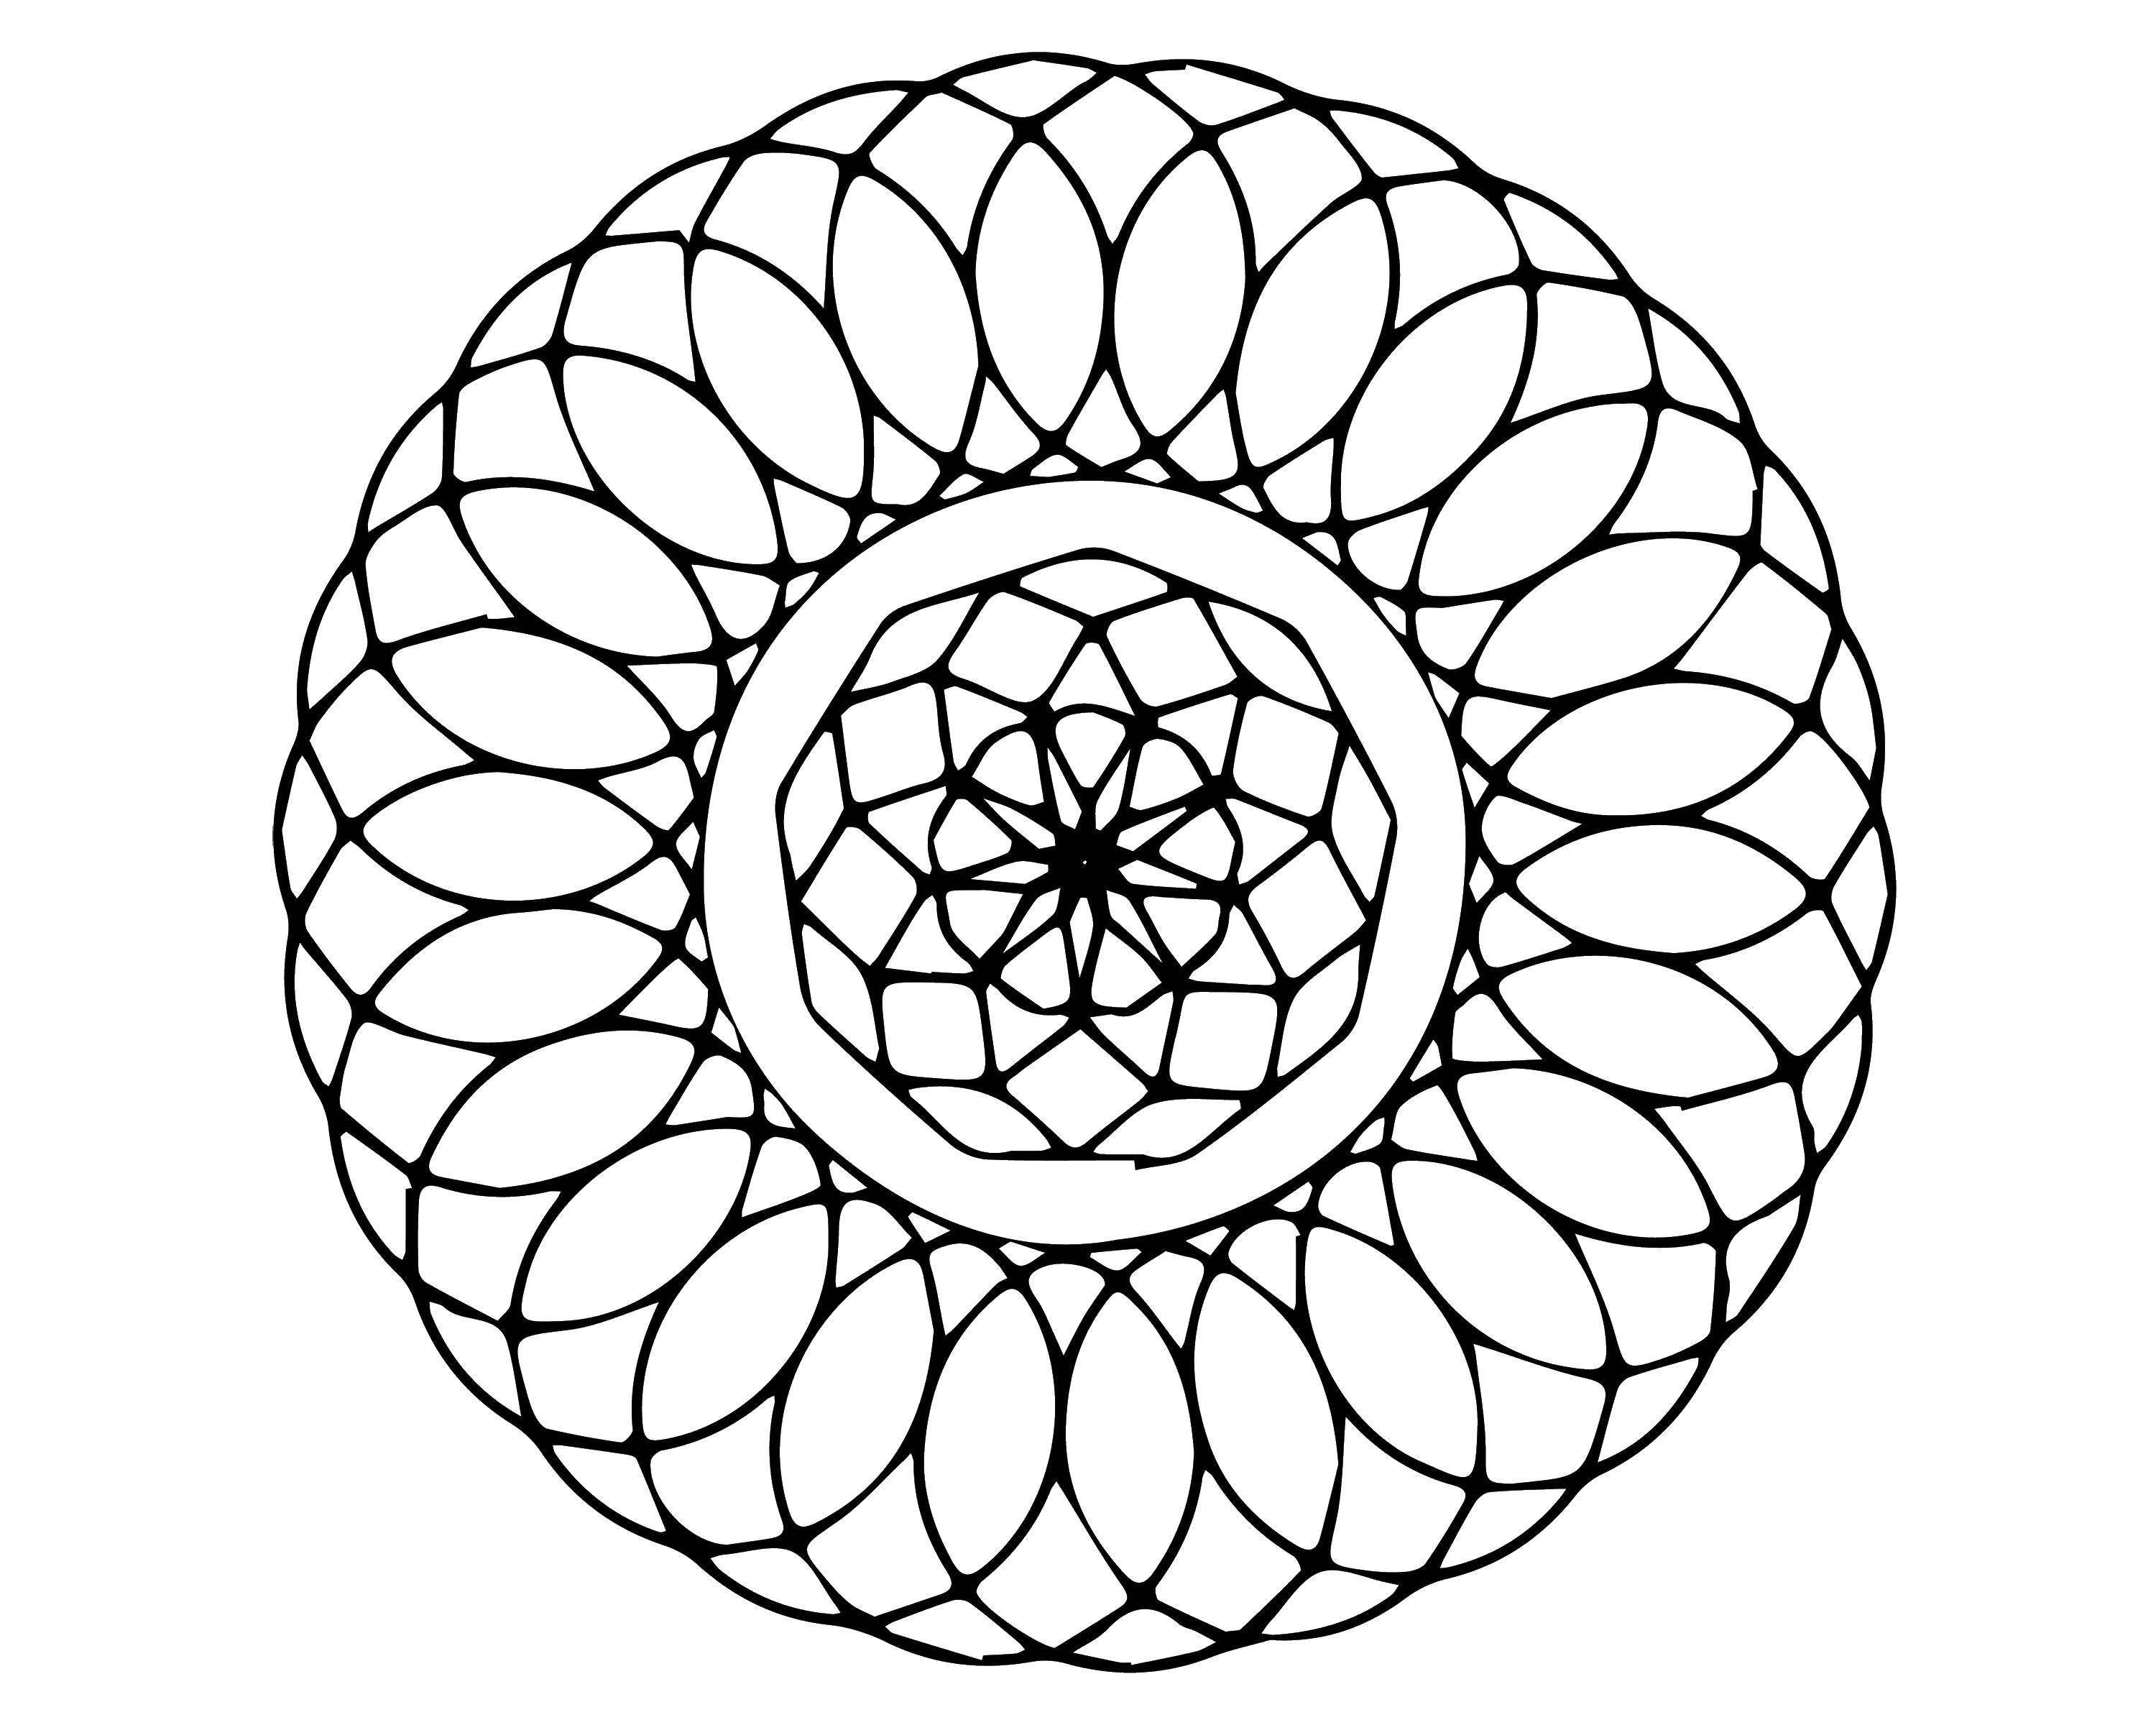 Coloring Swirly pattern. Category patterns. Tags:  Patterns, geometric.